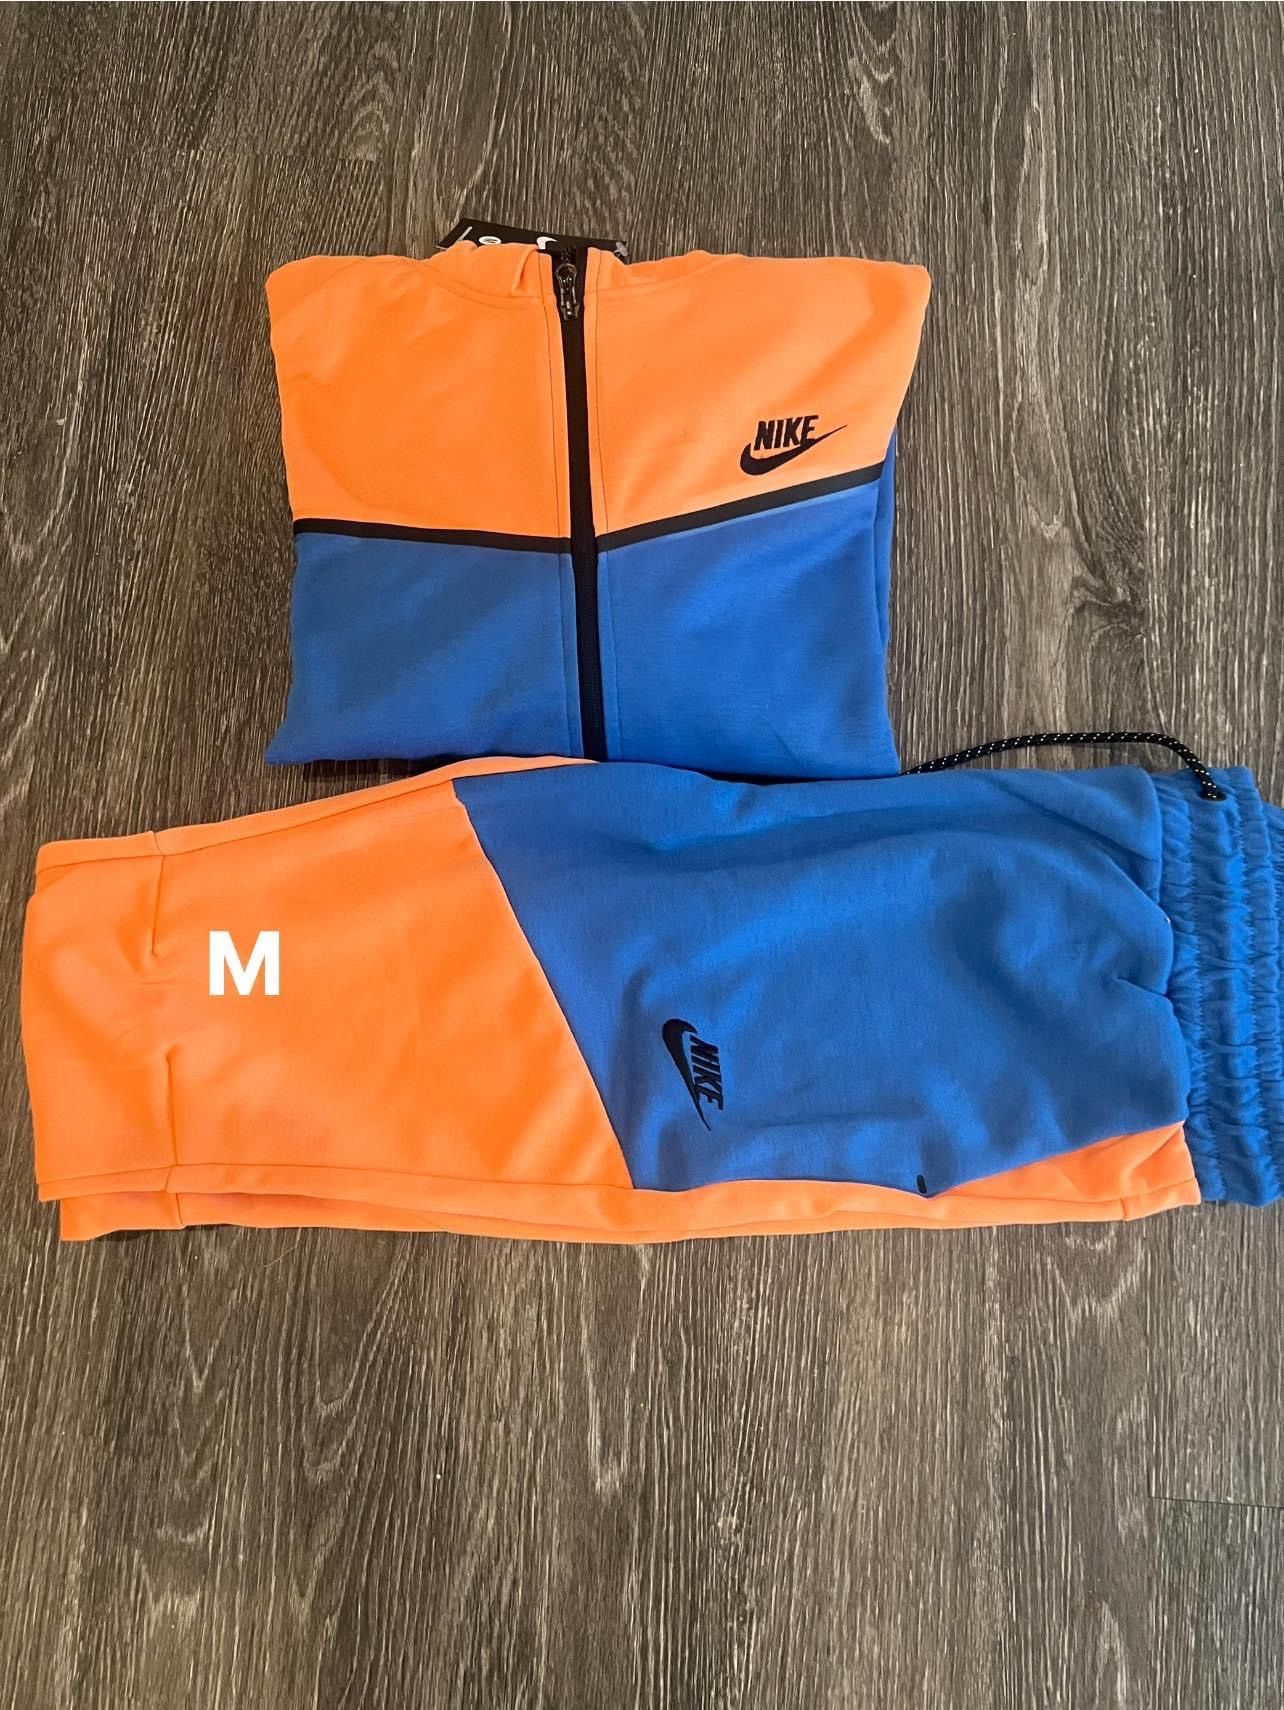 mens Nike sweatsuits sizes m left $70 each hmu 🔥💯✅